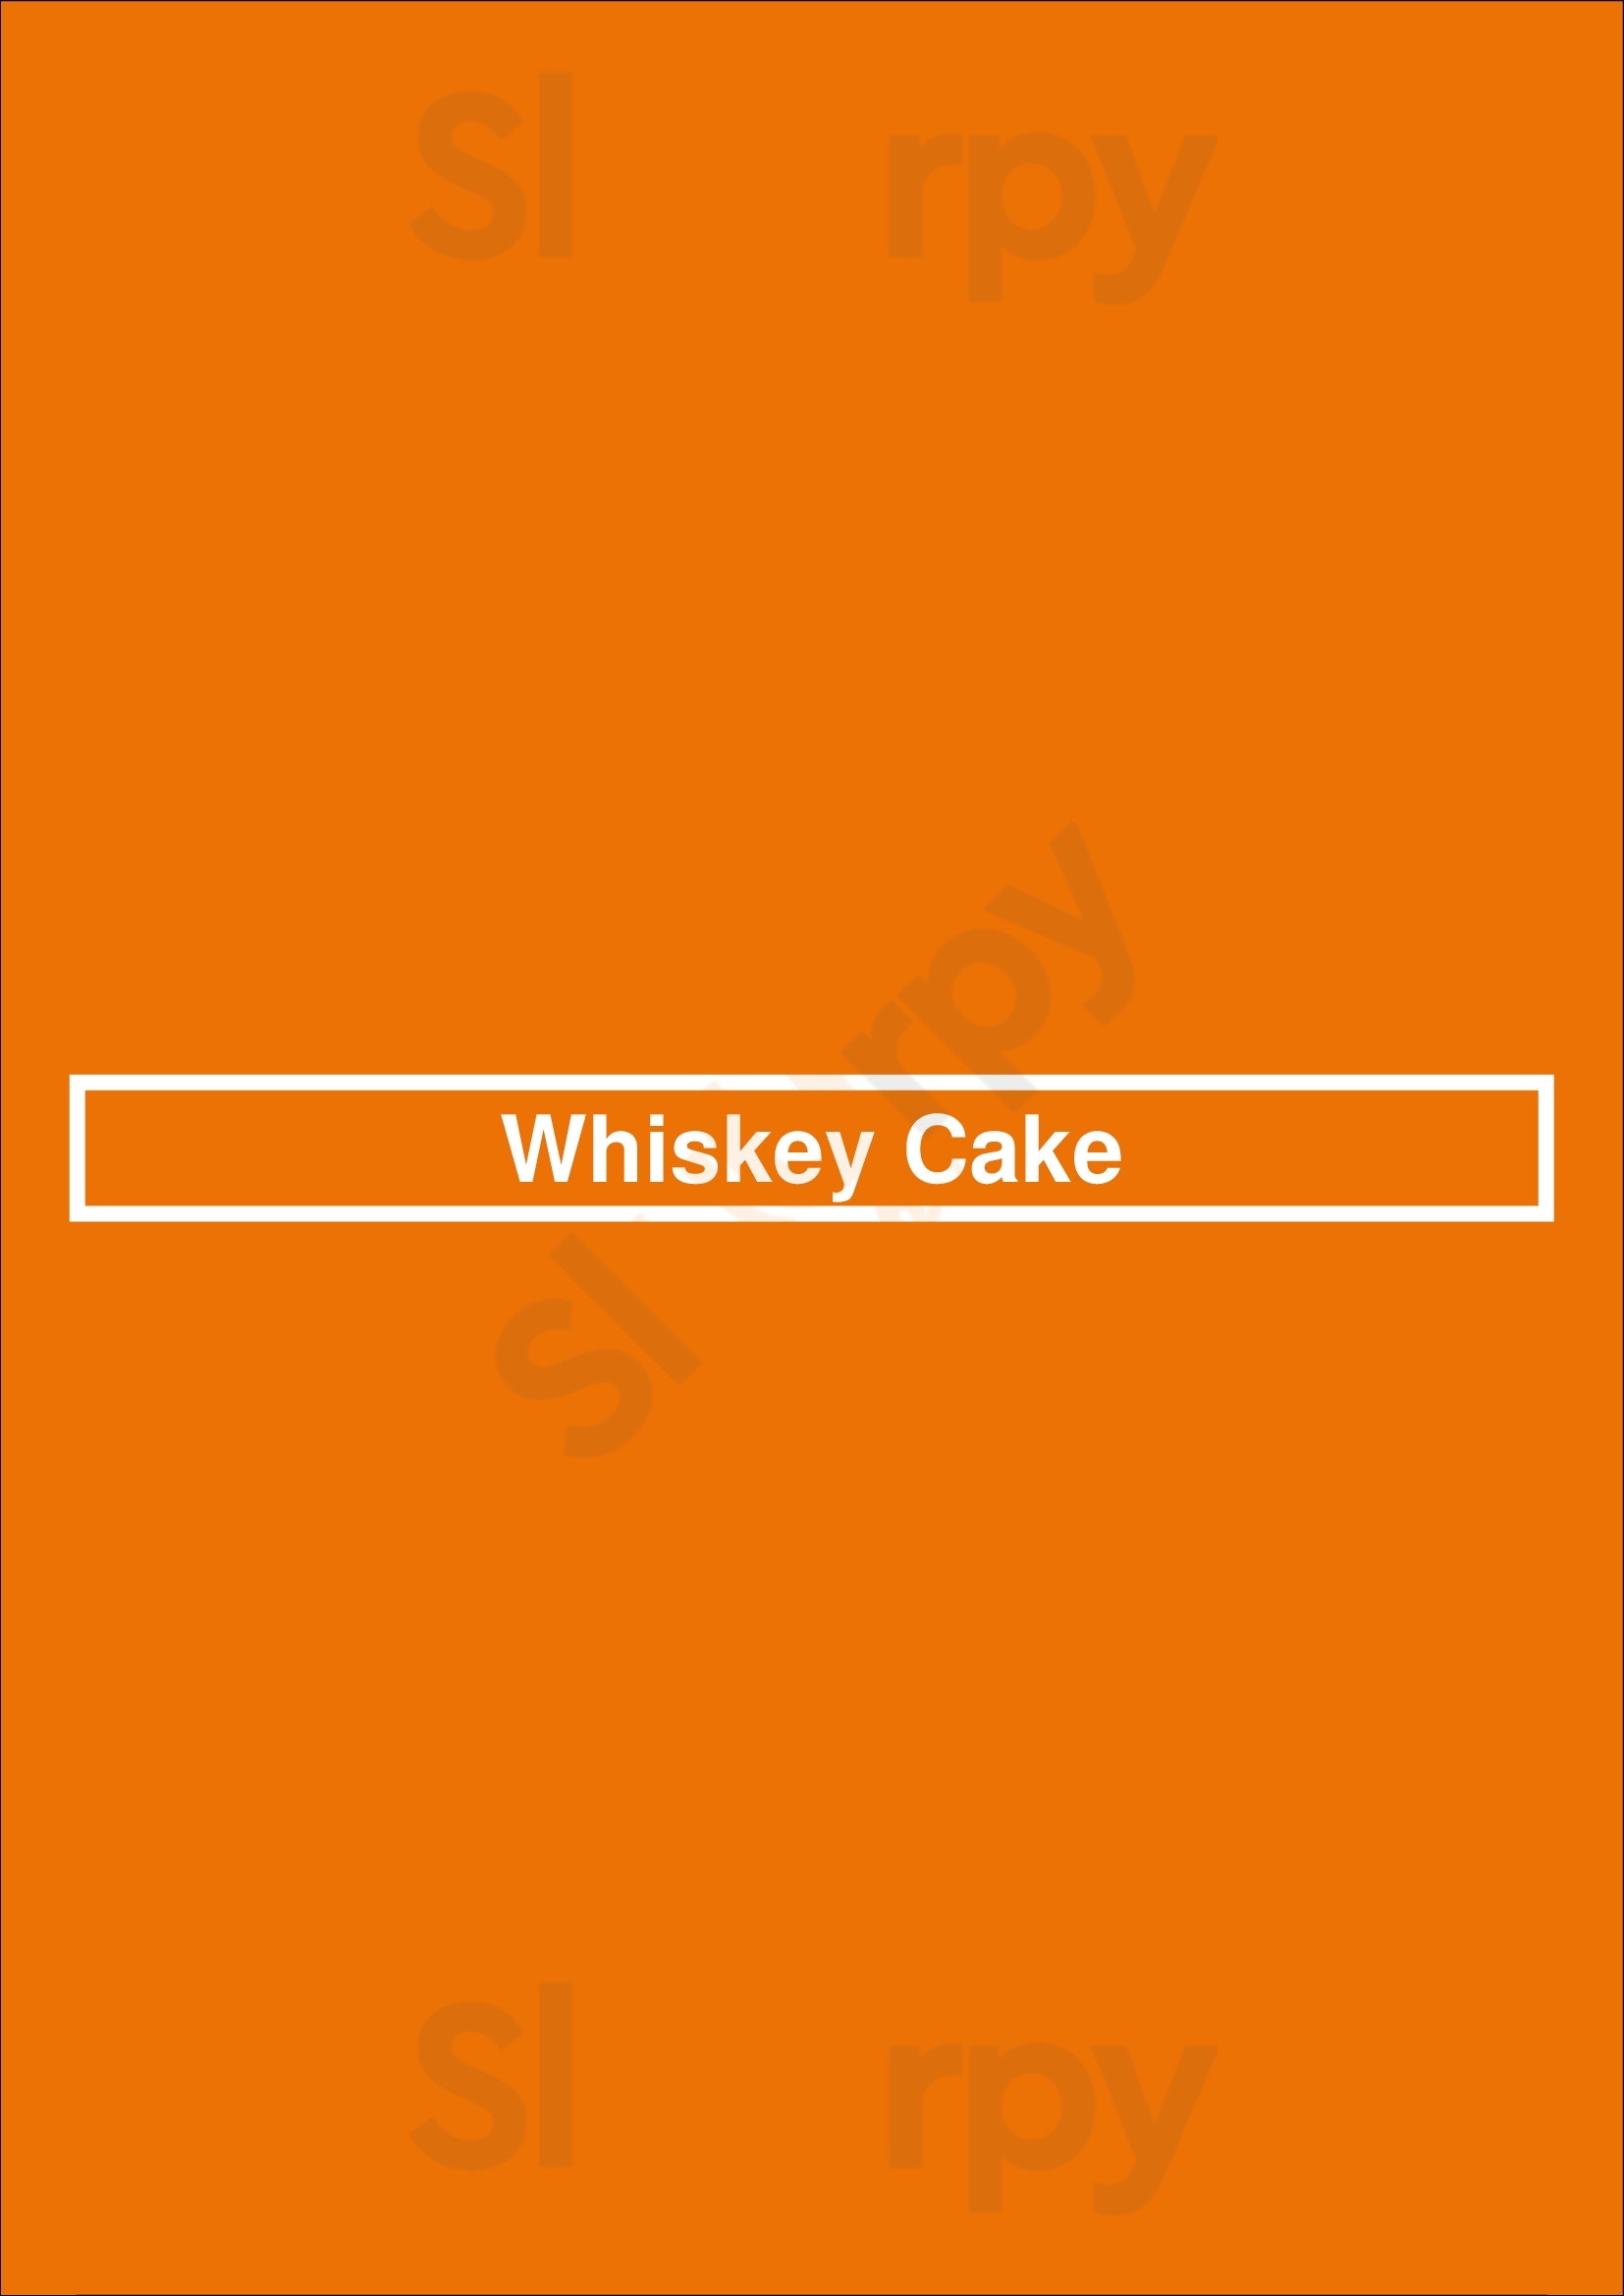 Whiskey Cake Kitchen & Bar Plano Menu - 1